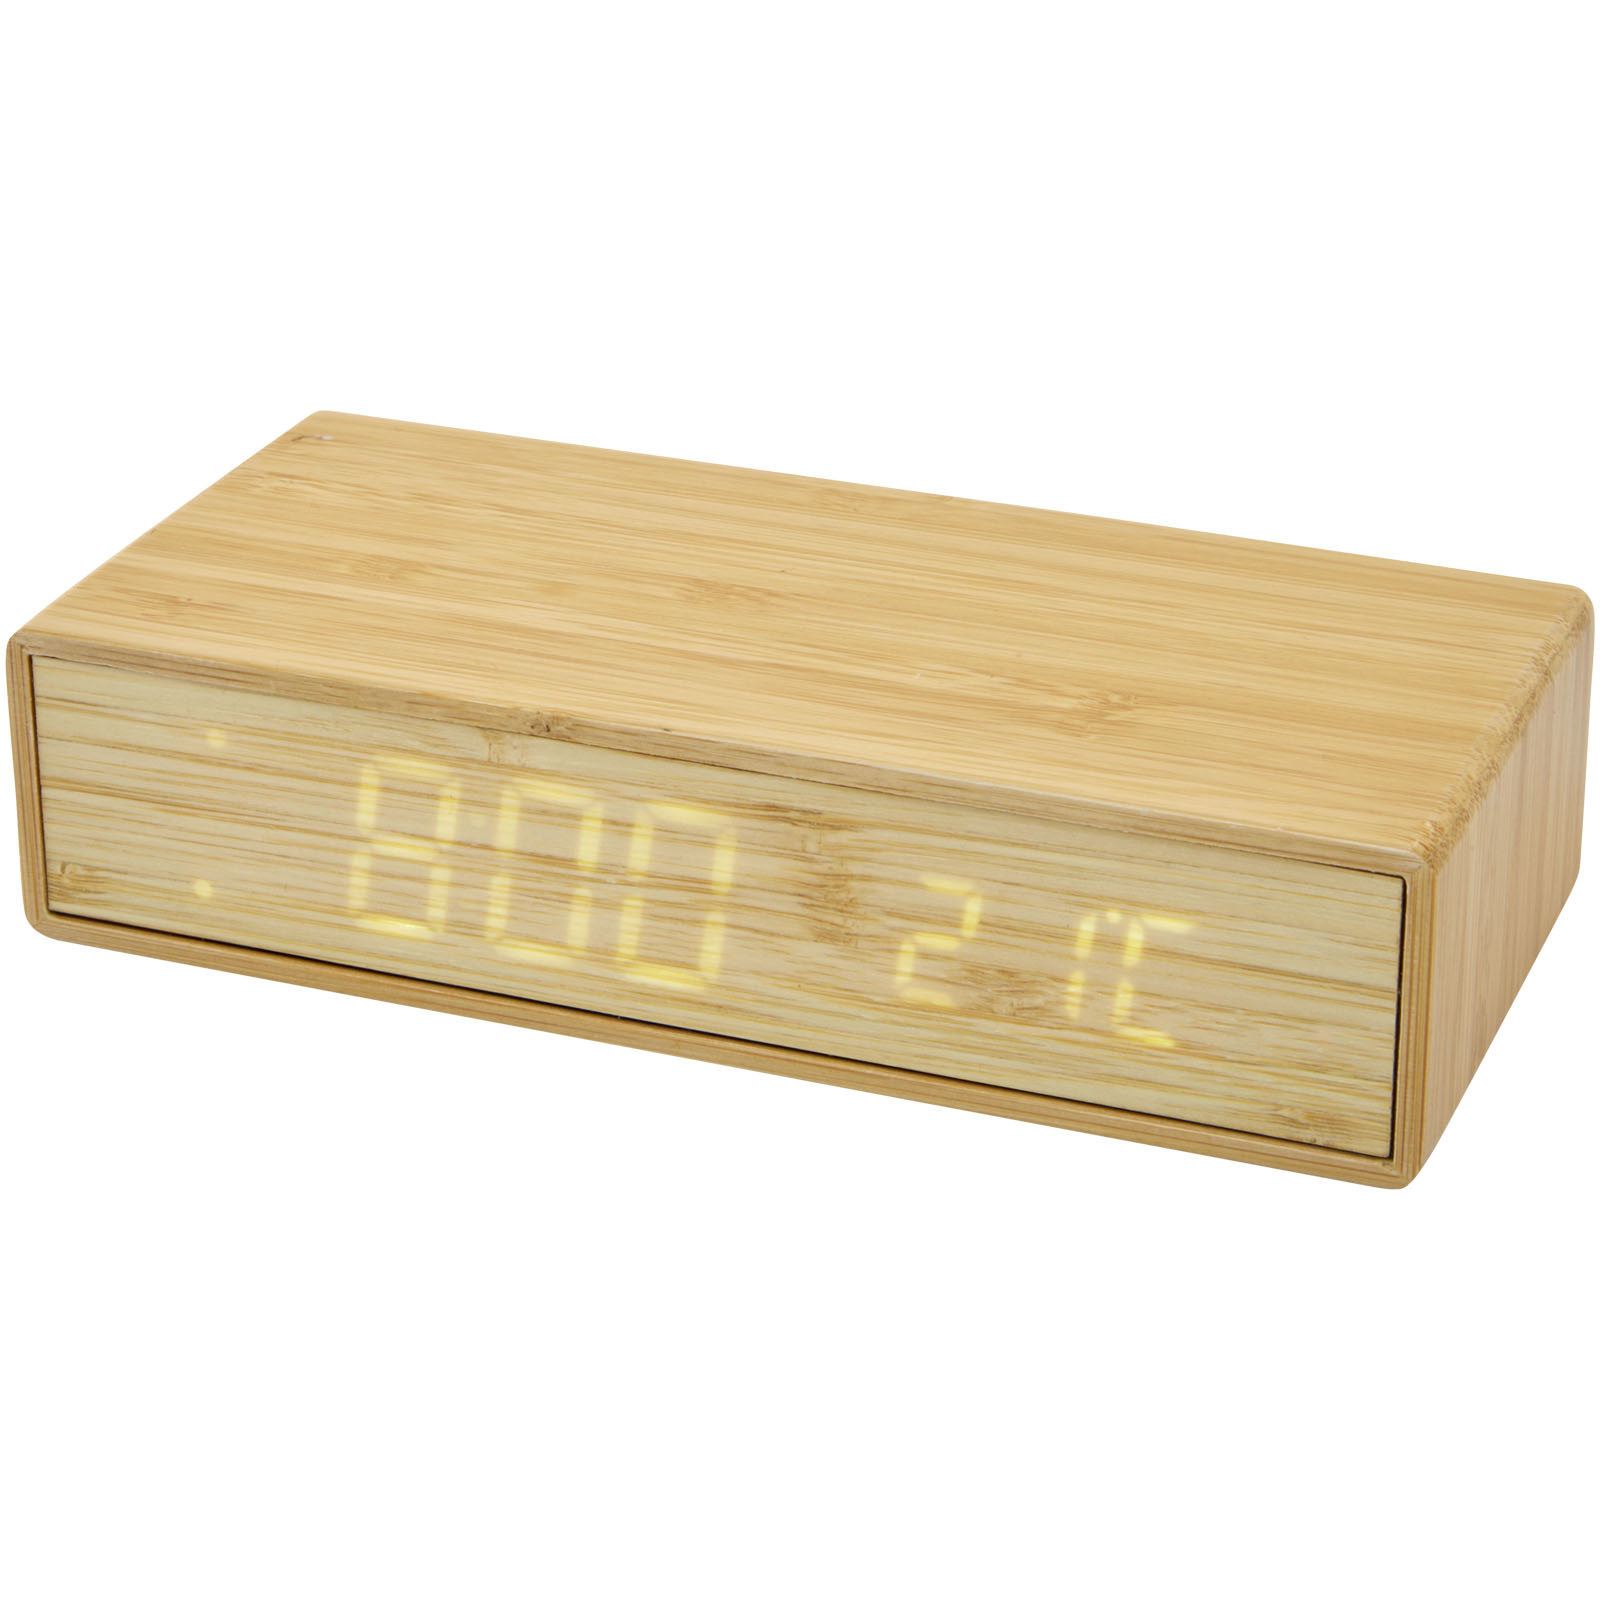 Technology - Minata bamboo wireless charger with clock